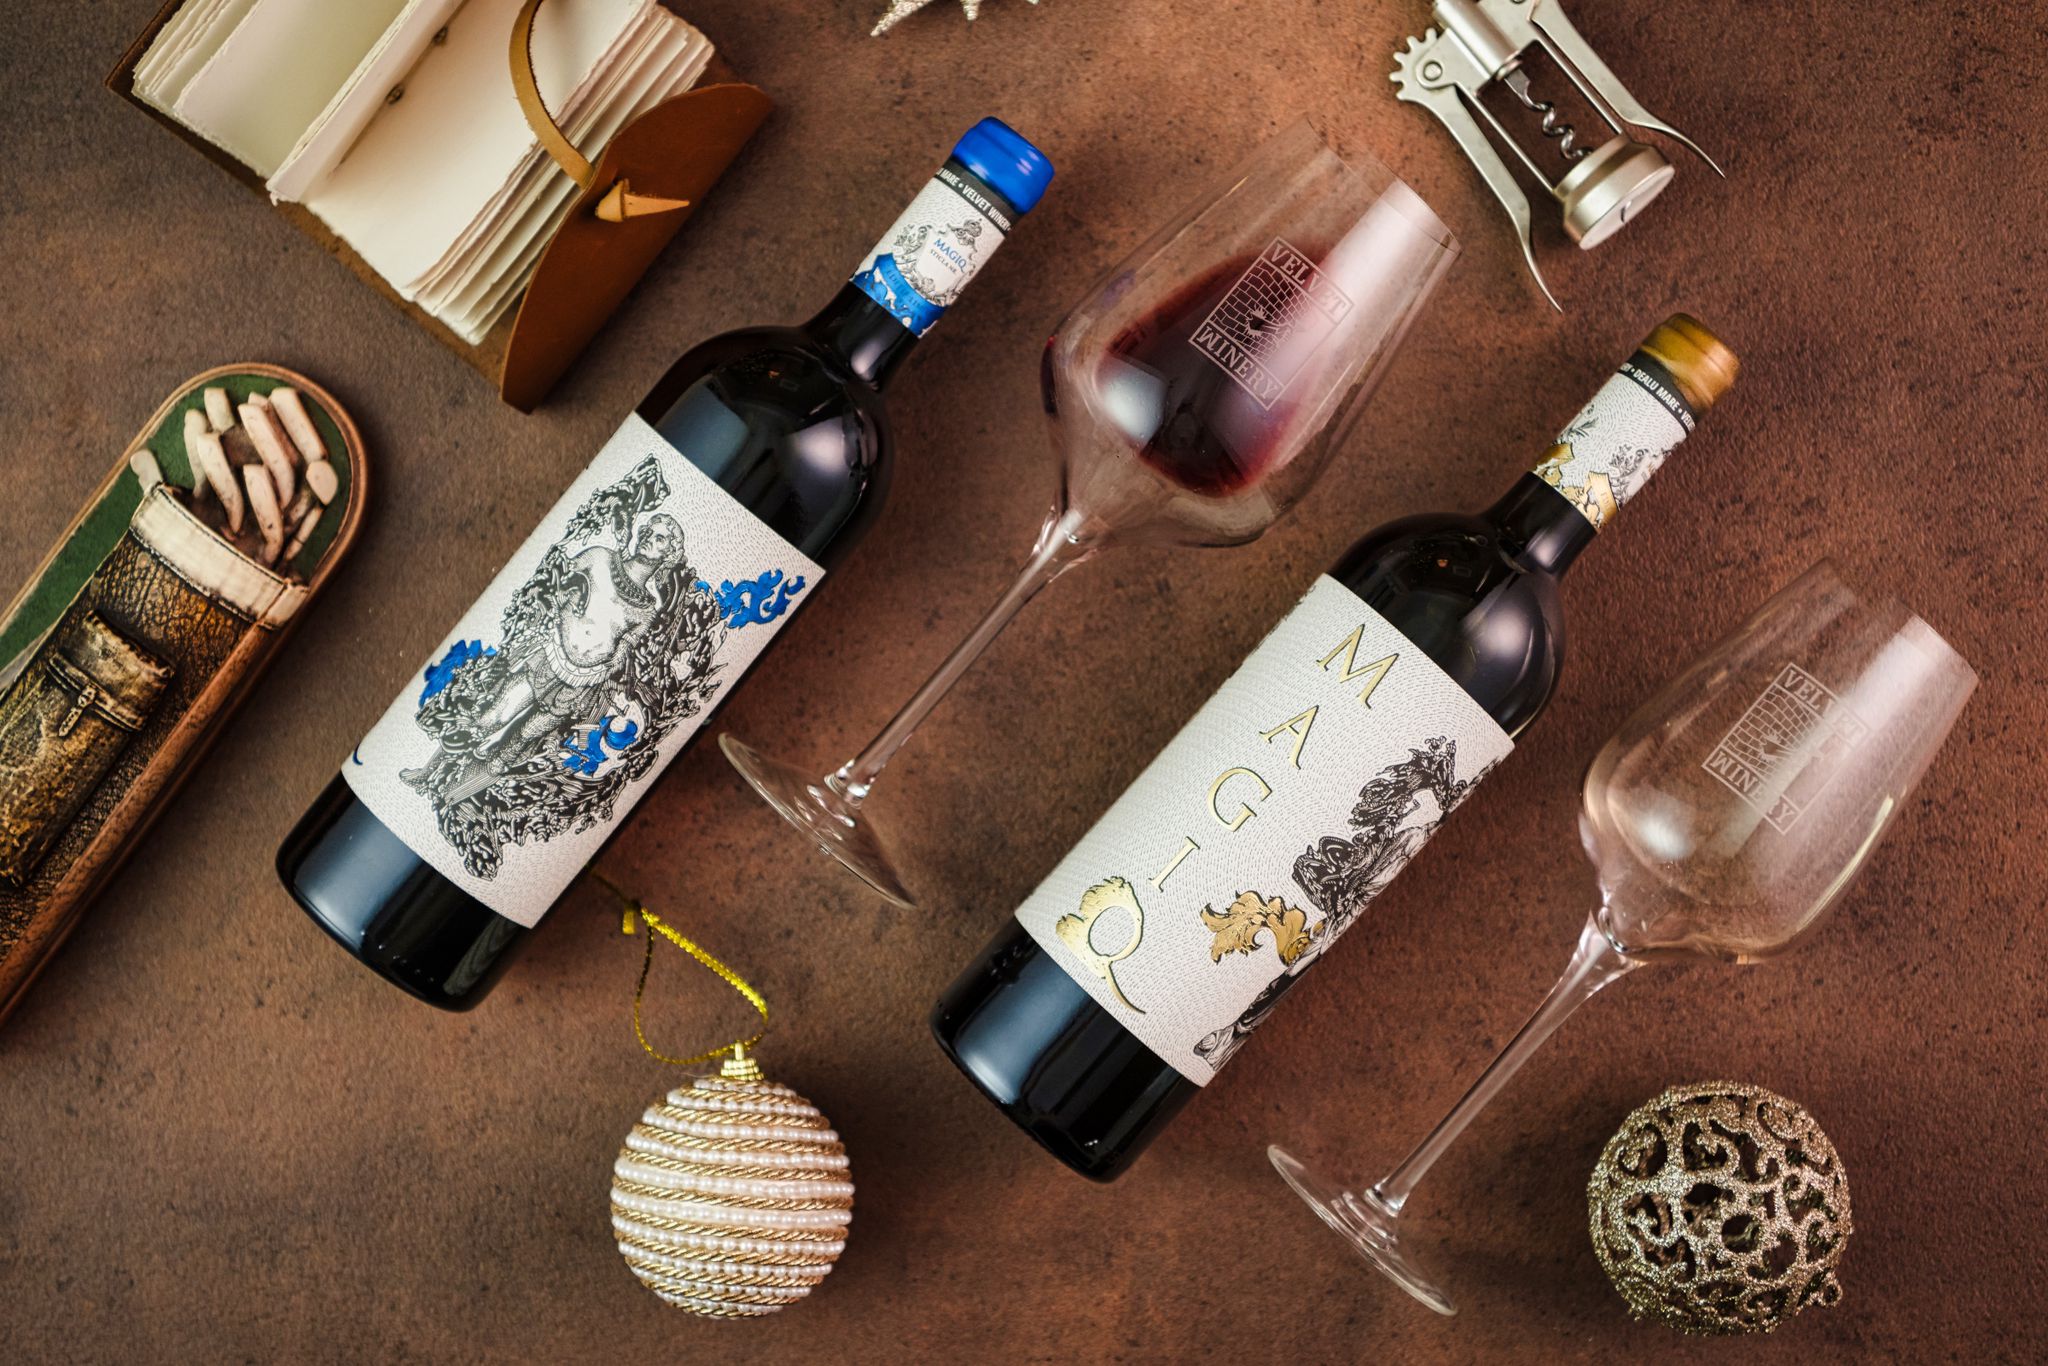 Velvet Winery launches Magiq range of wines